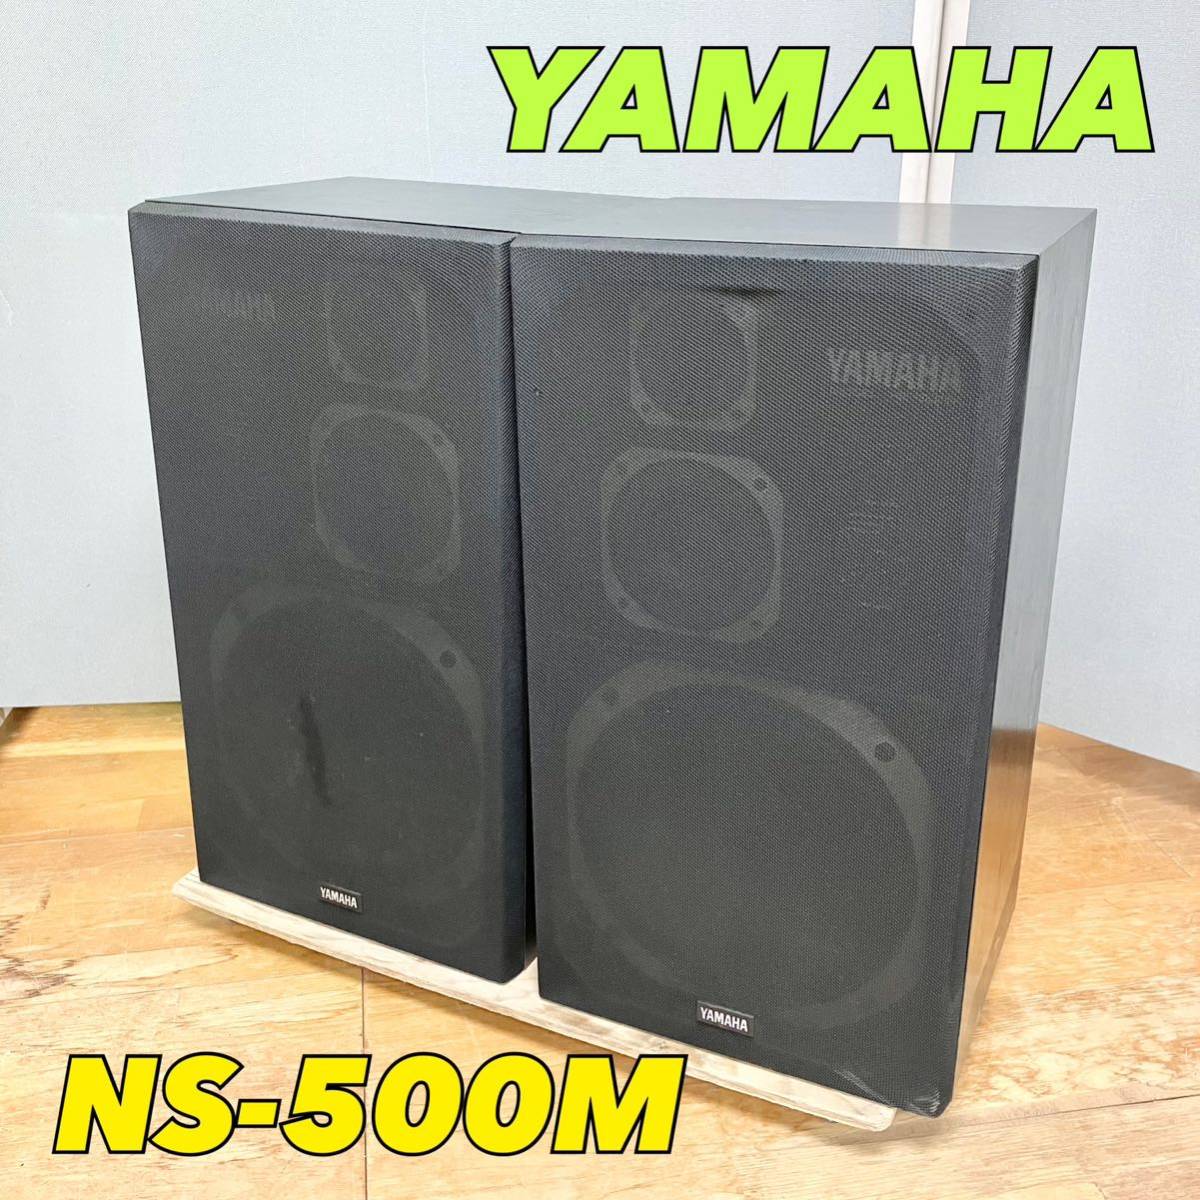 Yahoo!オークション -「yamaha ns-500m」(家電、AV、カメラ) の落札 